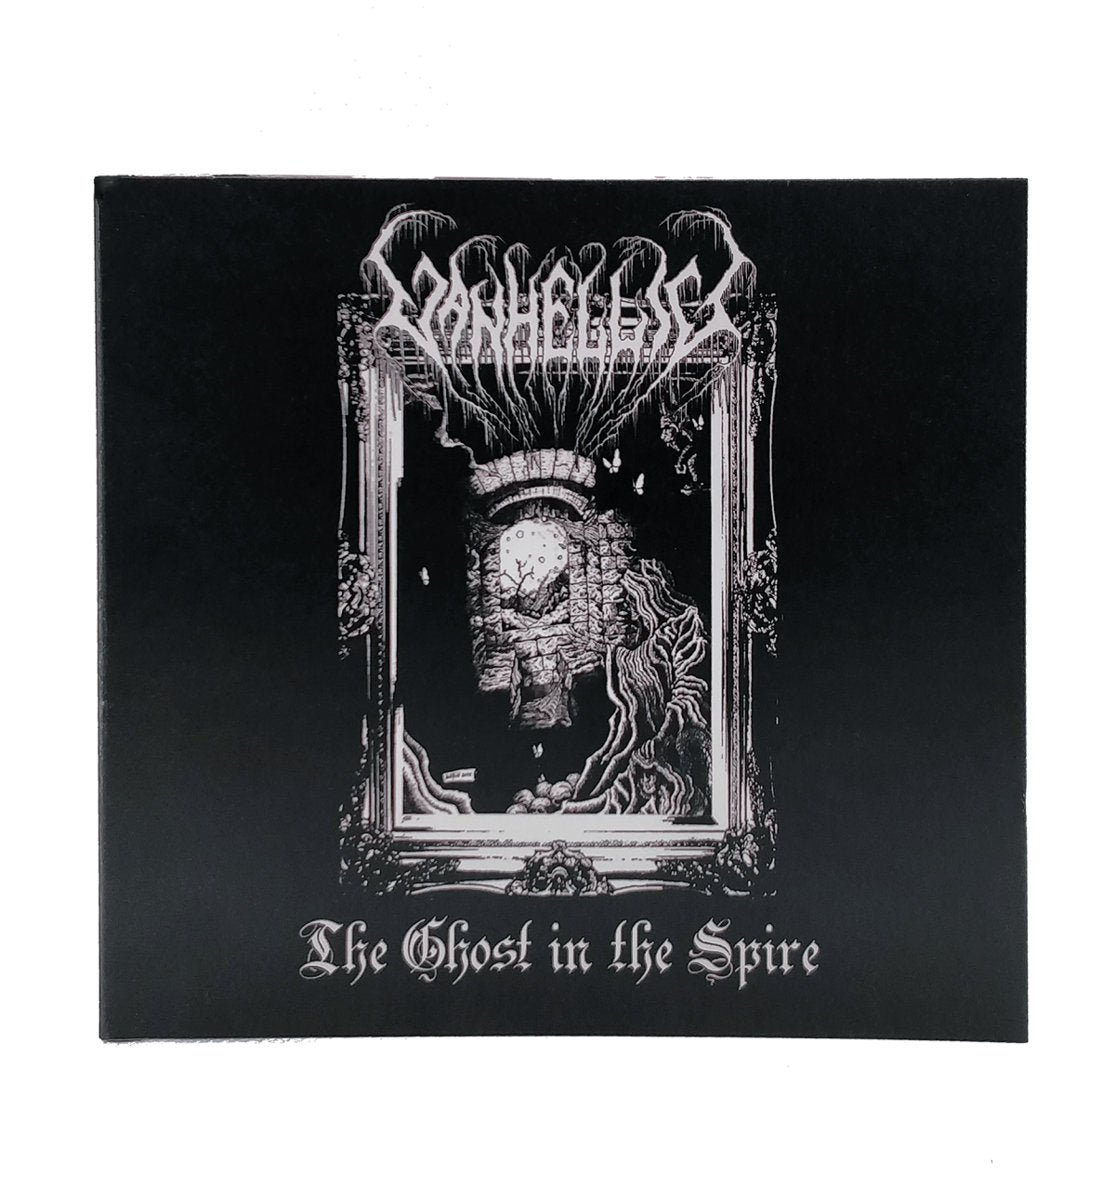 VANHELLIG "The Ghost in the Spire" CD [digipak]